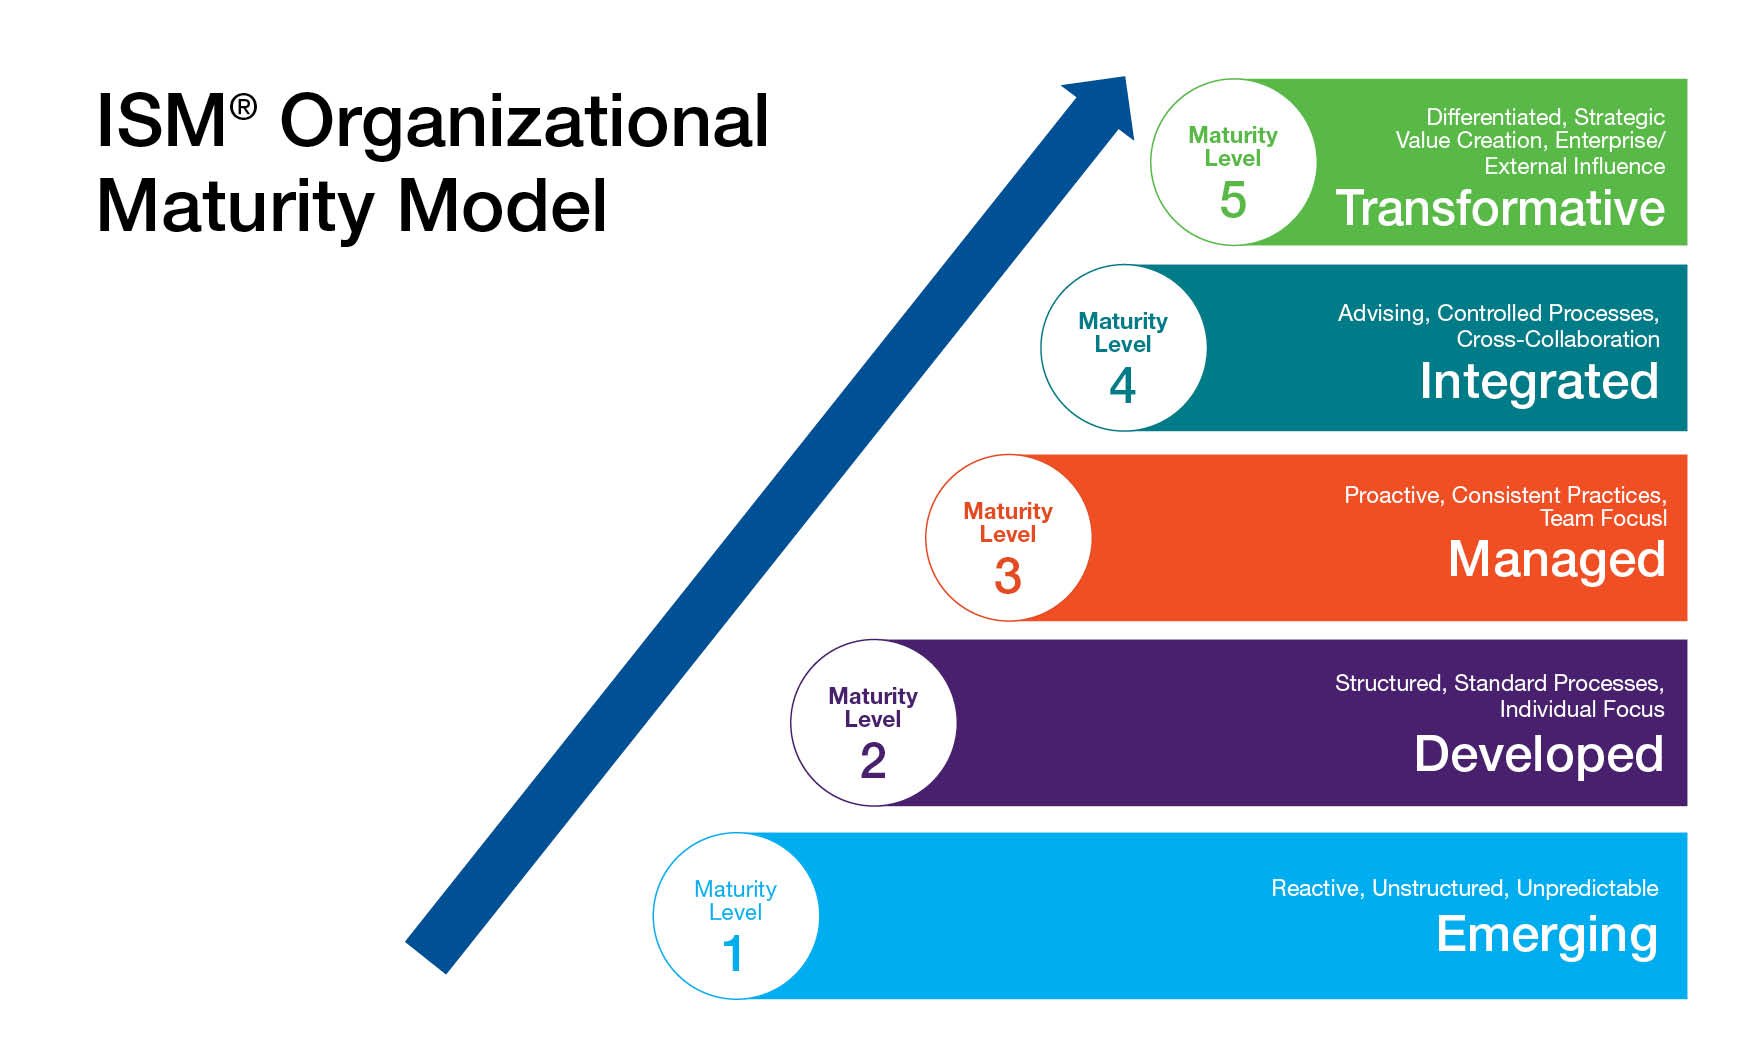 ISM Organizational Maturity Assessment Model